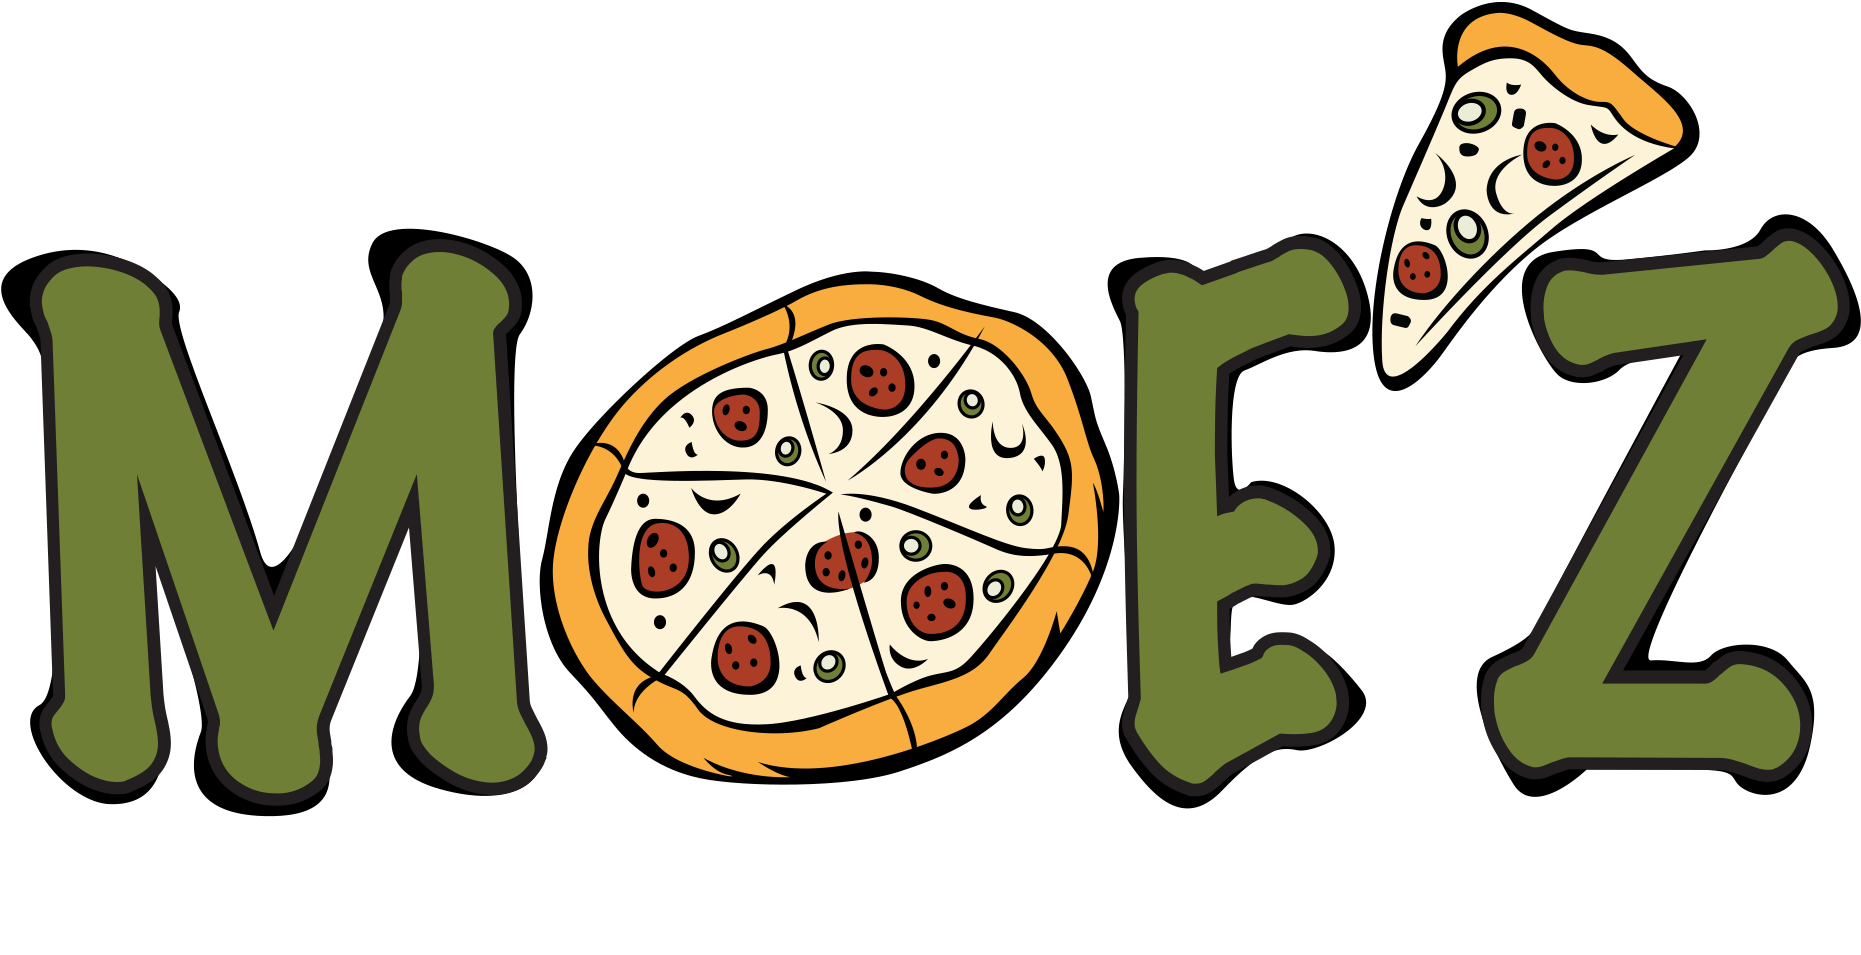 Best Pizza Restaurant, Italian Food, Catering In Harrisburg - Best Pizza Restaurant, Italian Food, Catering In Harrisburg (2135x1044)